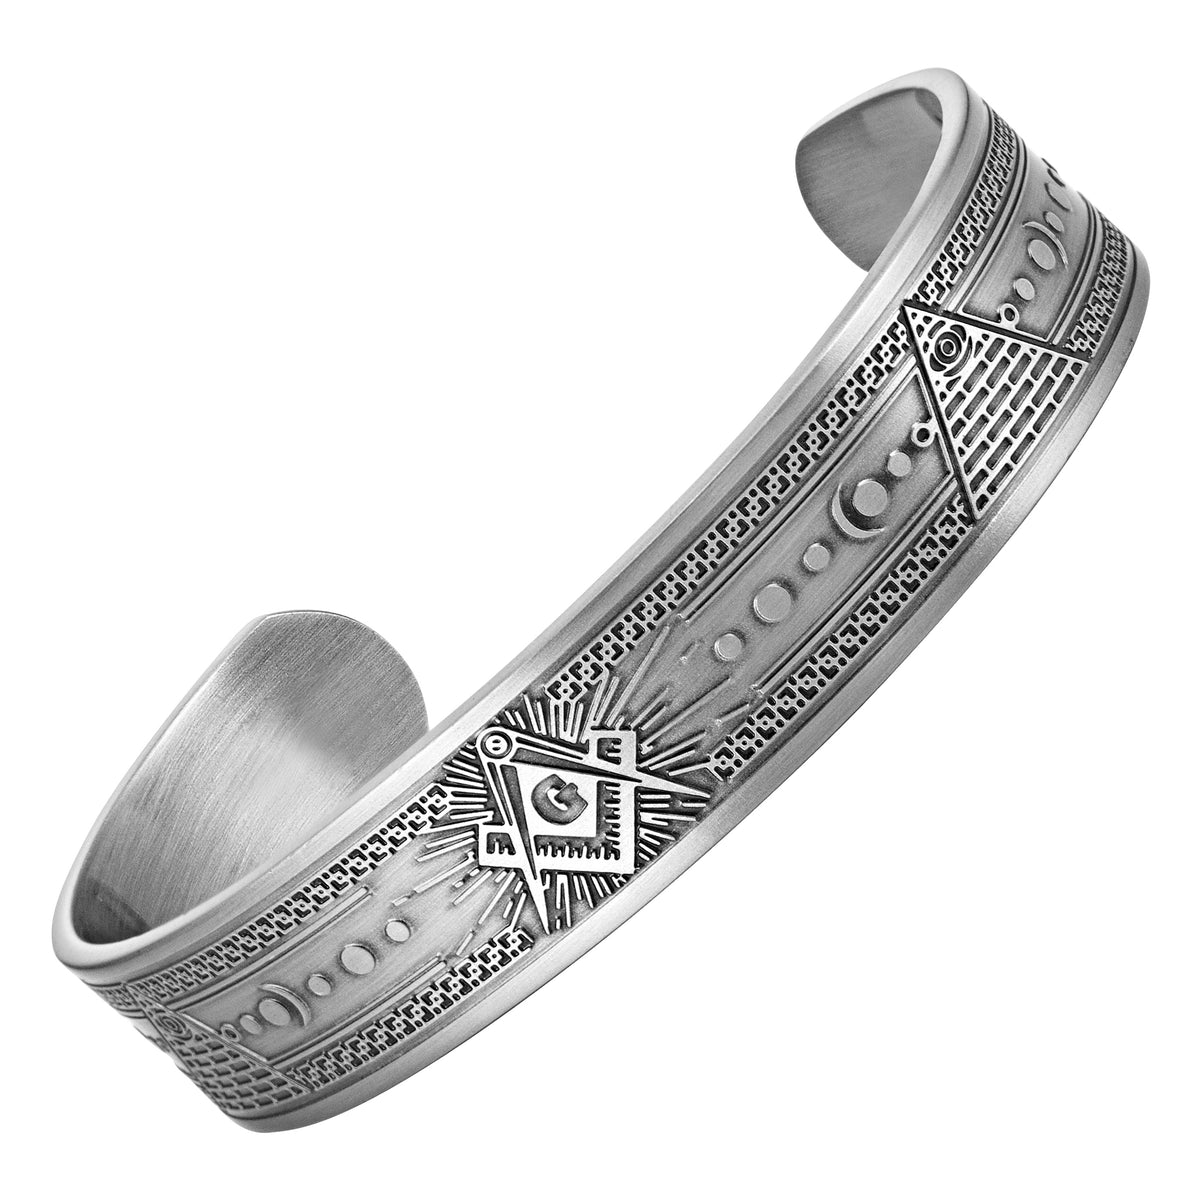 MasonicMan Engraved Pure Copper Bangle Bracelet - Antique Finish (Non Magnetic)